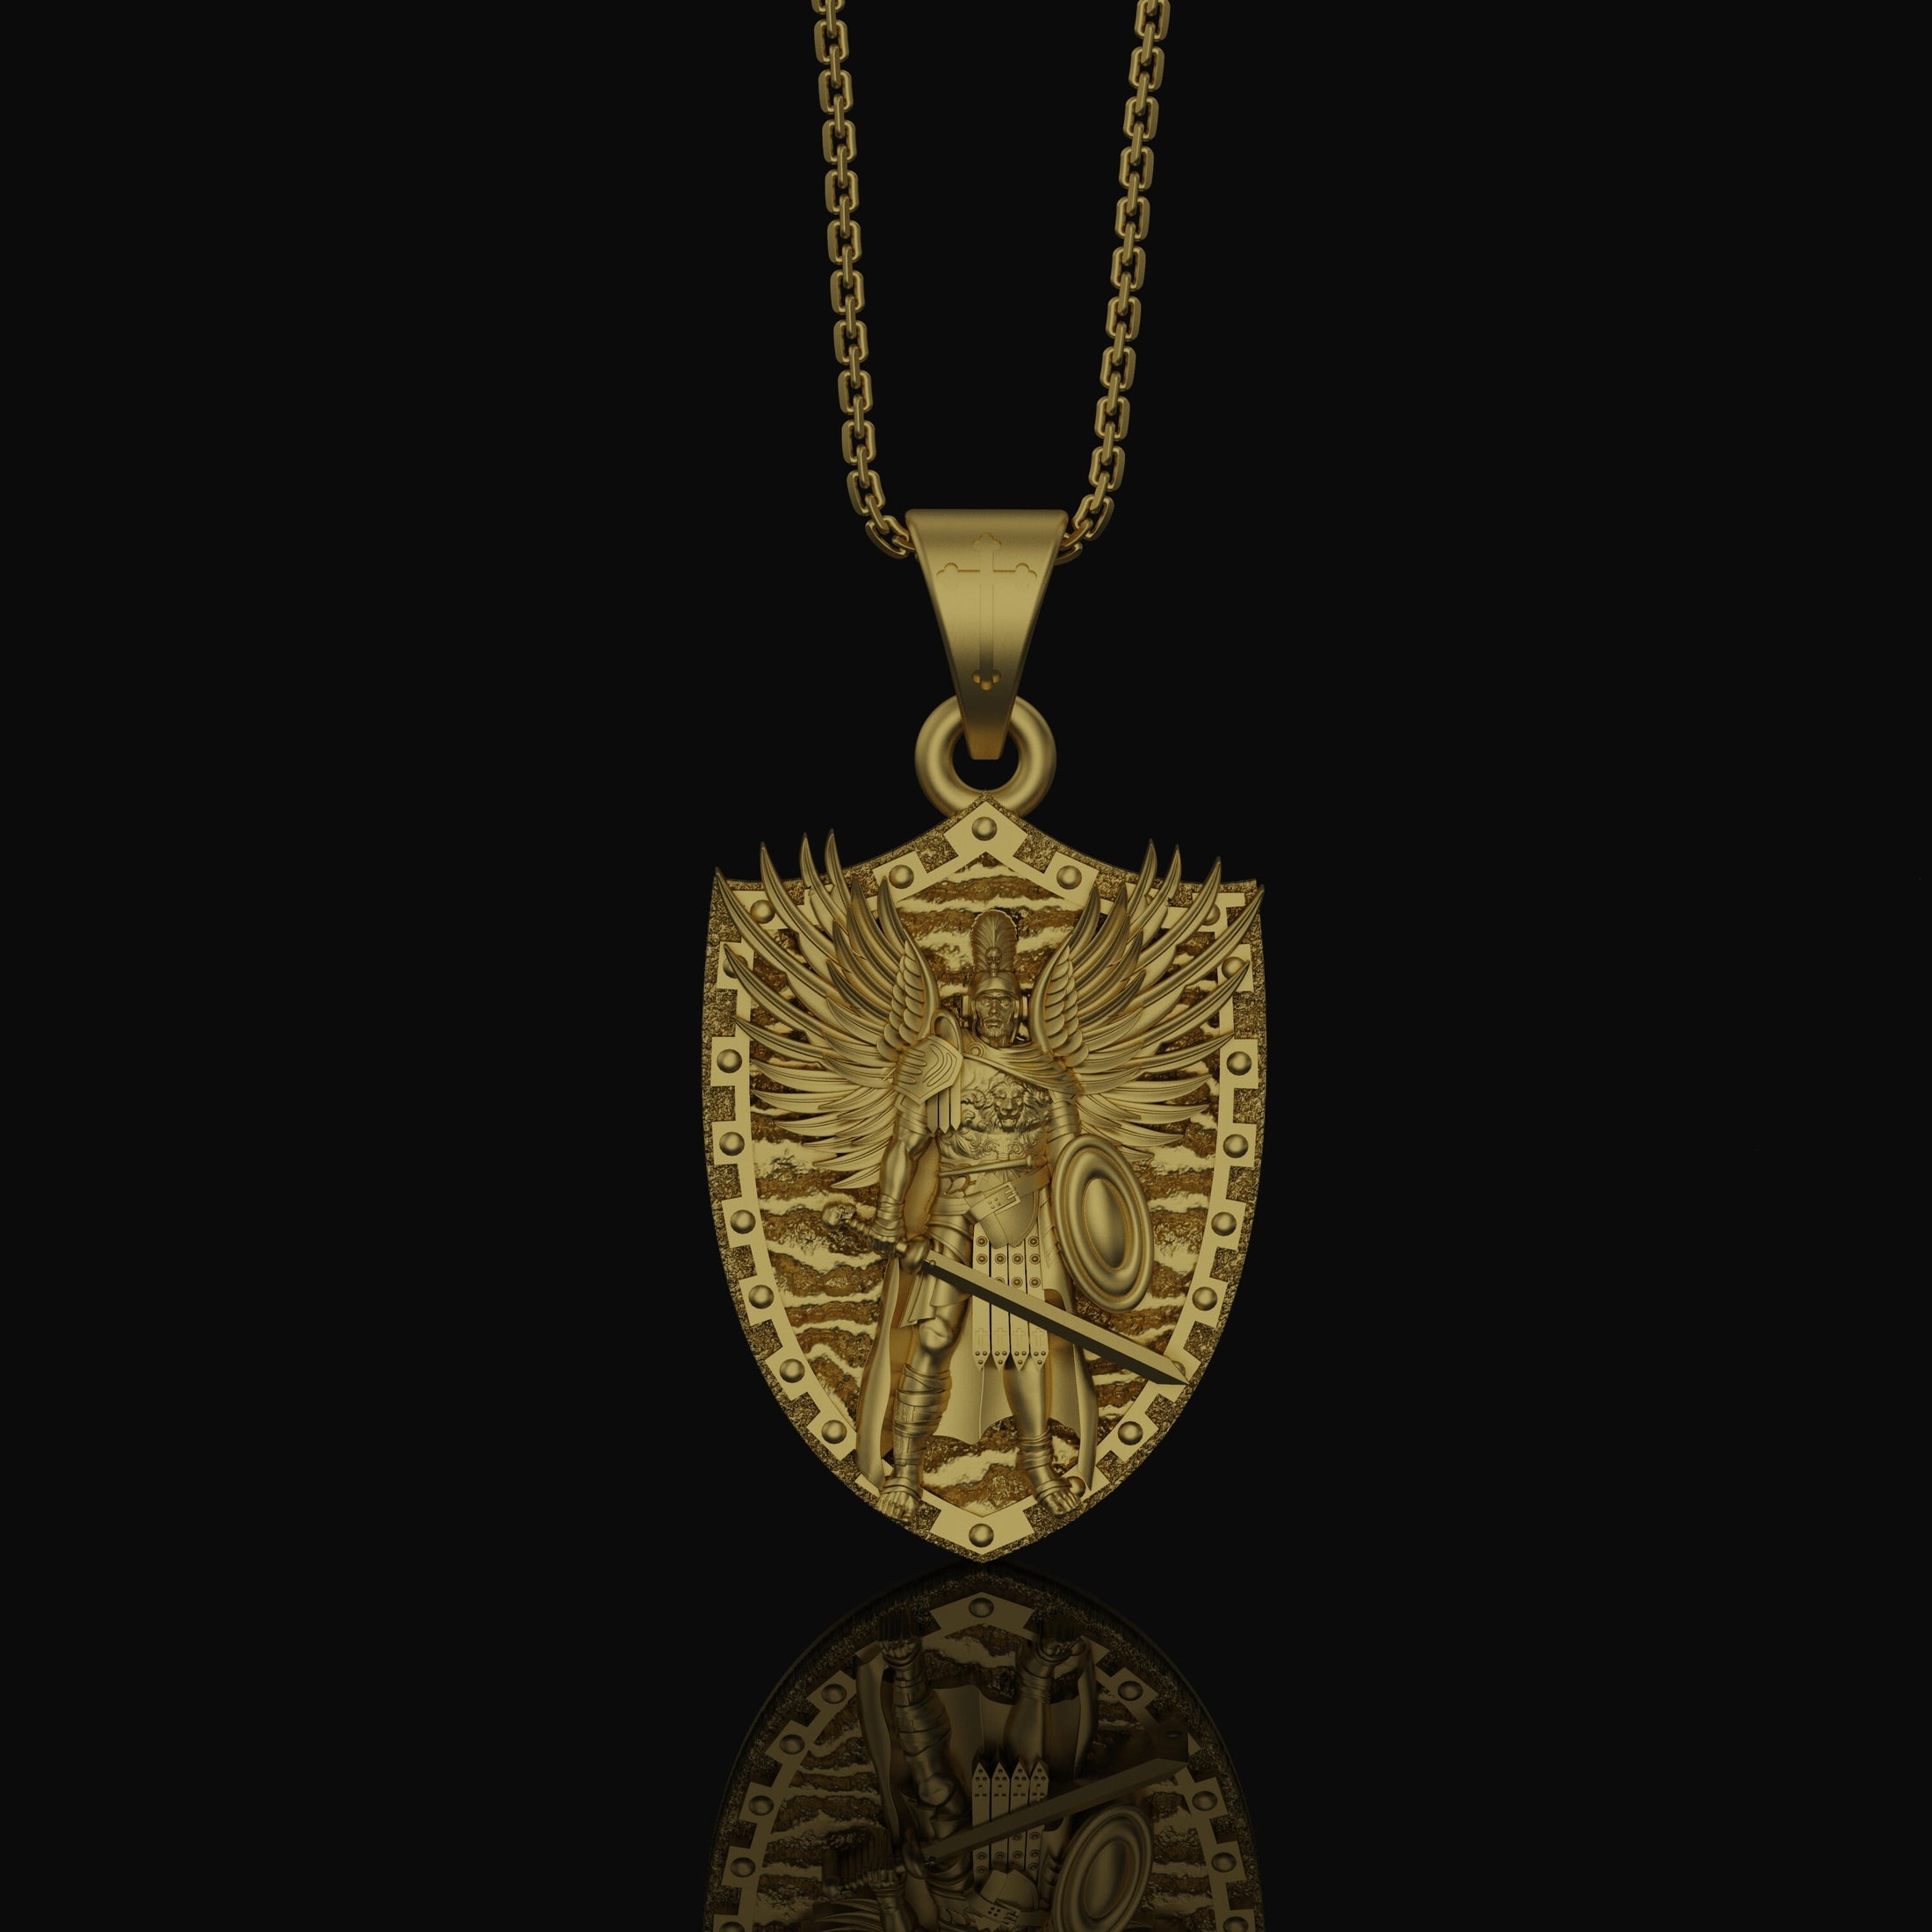 Silver Archangel Michael Pendant - Protector Saint Necklace, Christian Guardian Angel Jewelry, Spiritual Gift